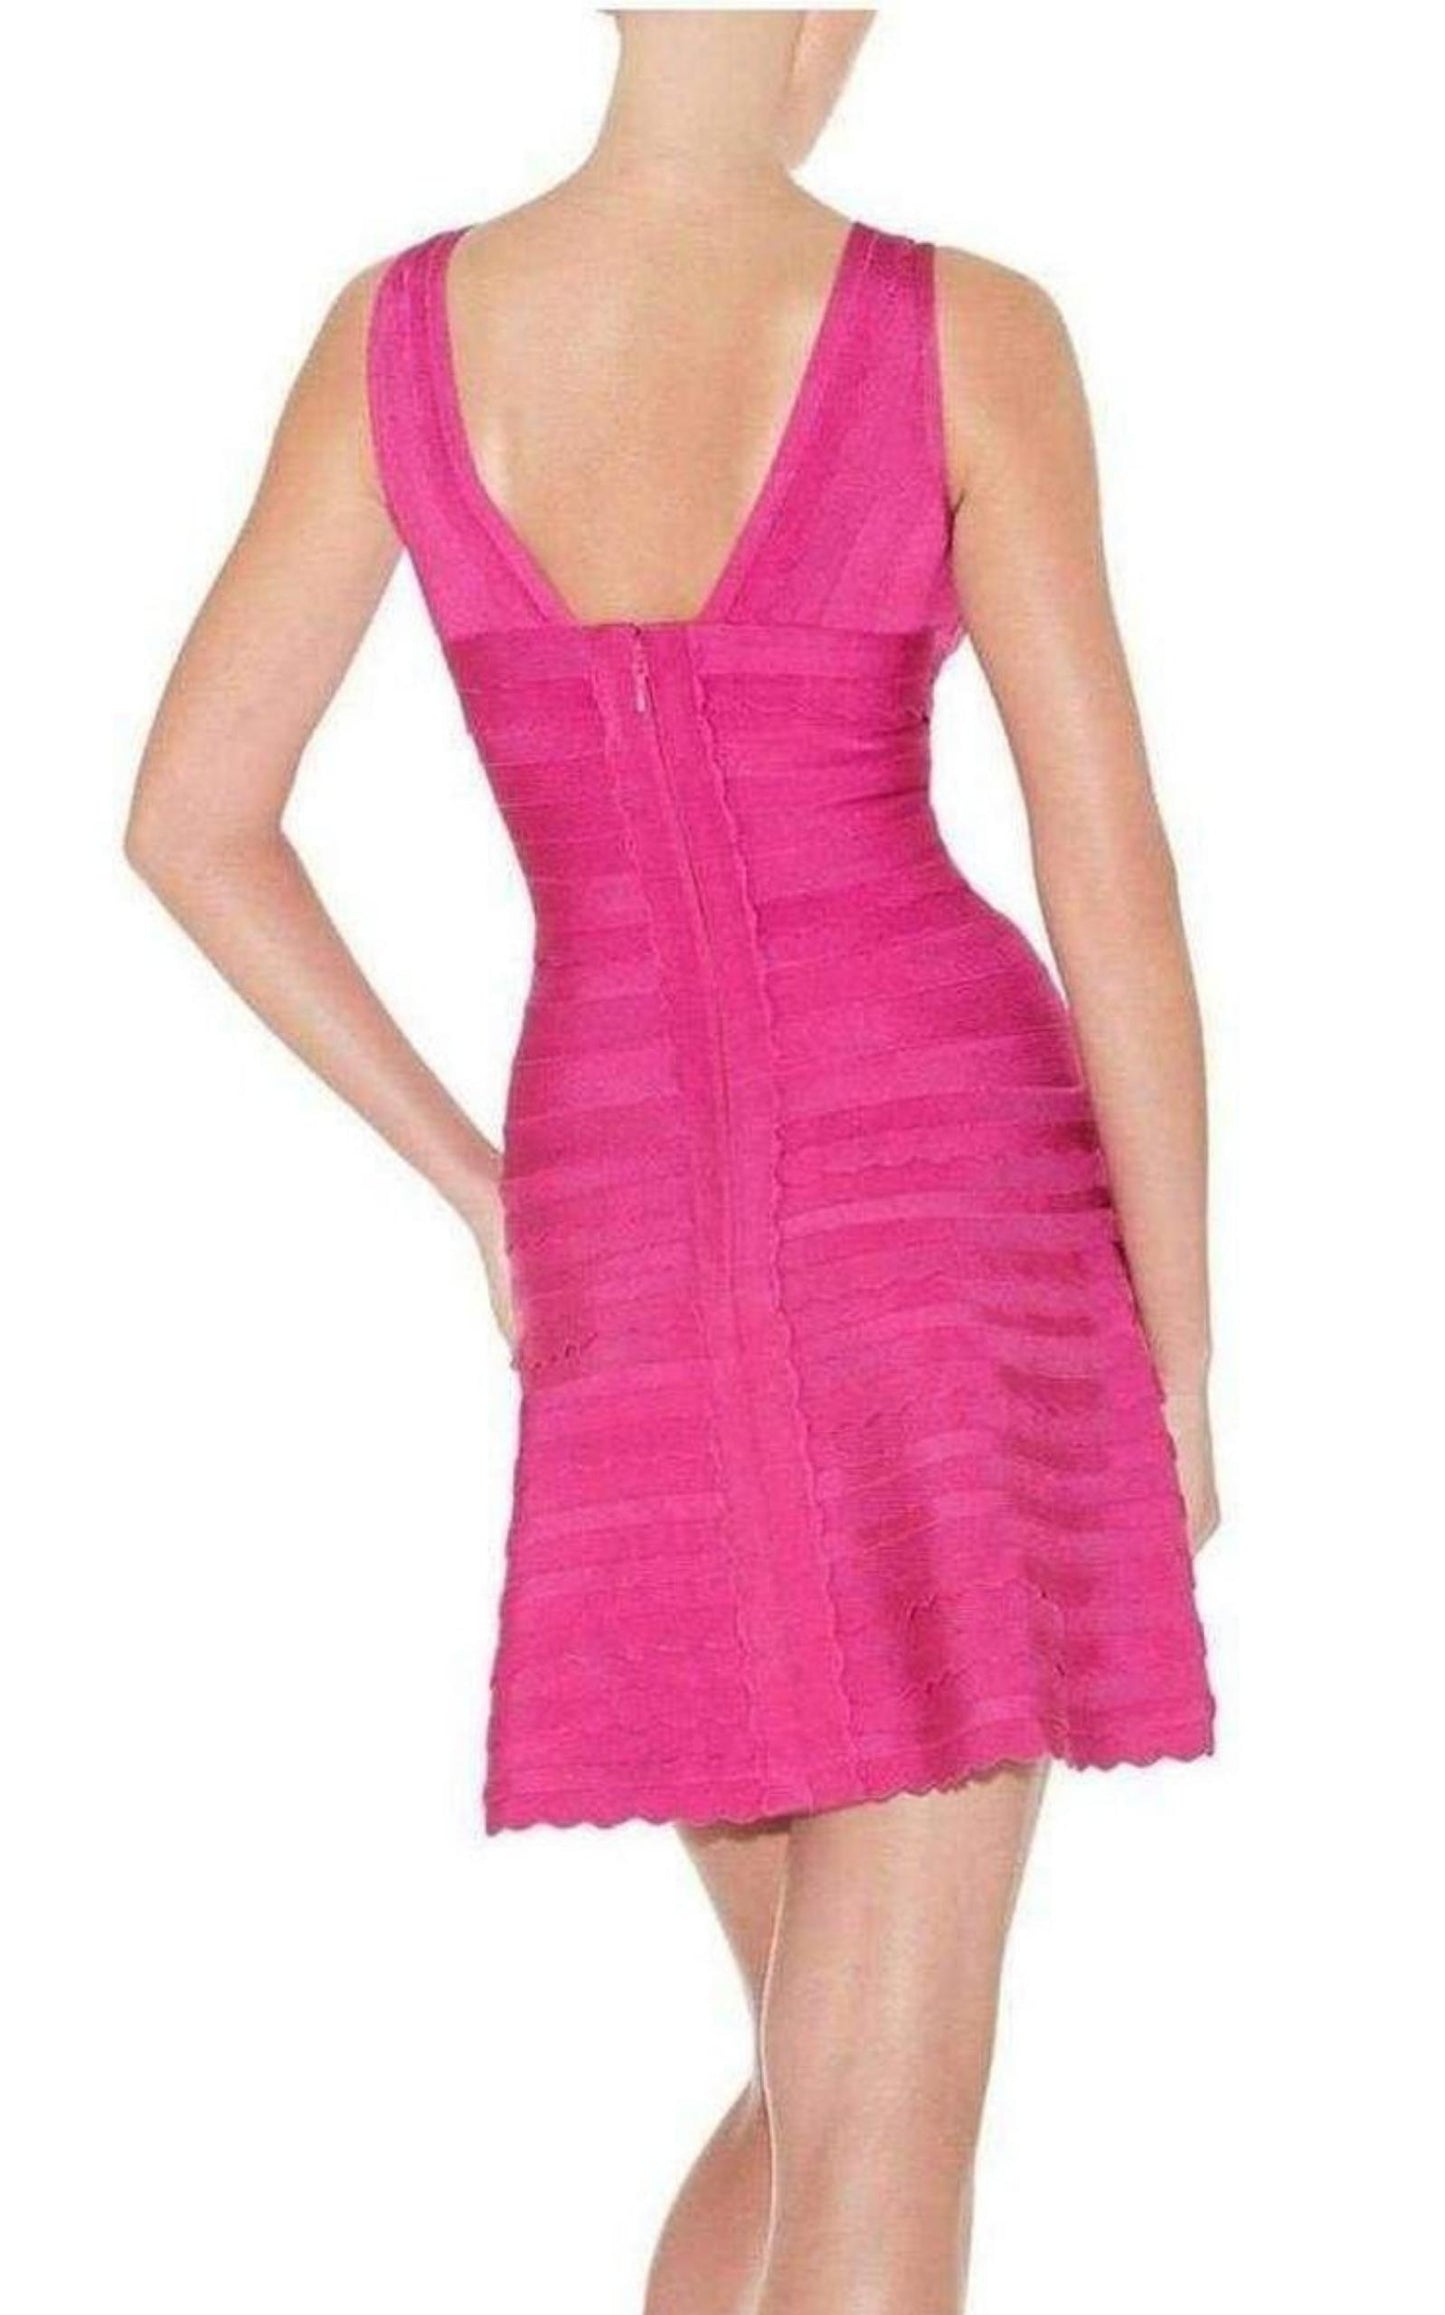  Herve LegerNikayla Scalloped Edge Caprice Pink Dress - Runway Catalog